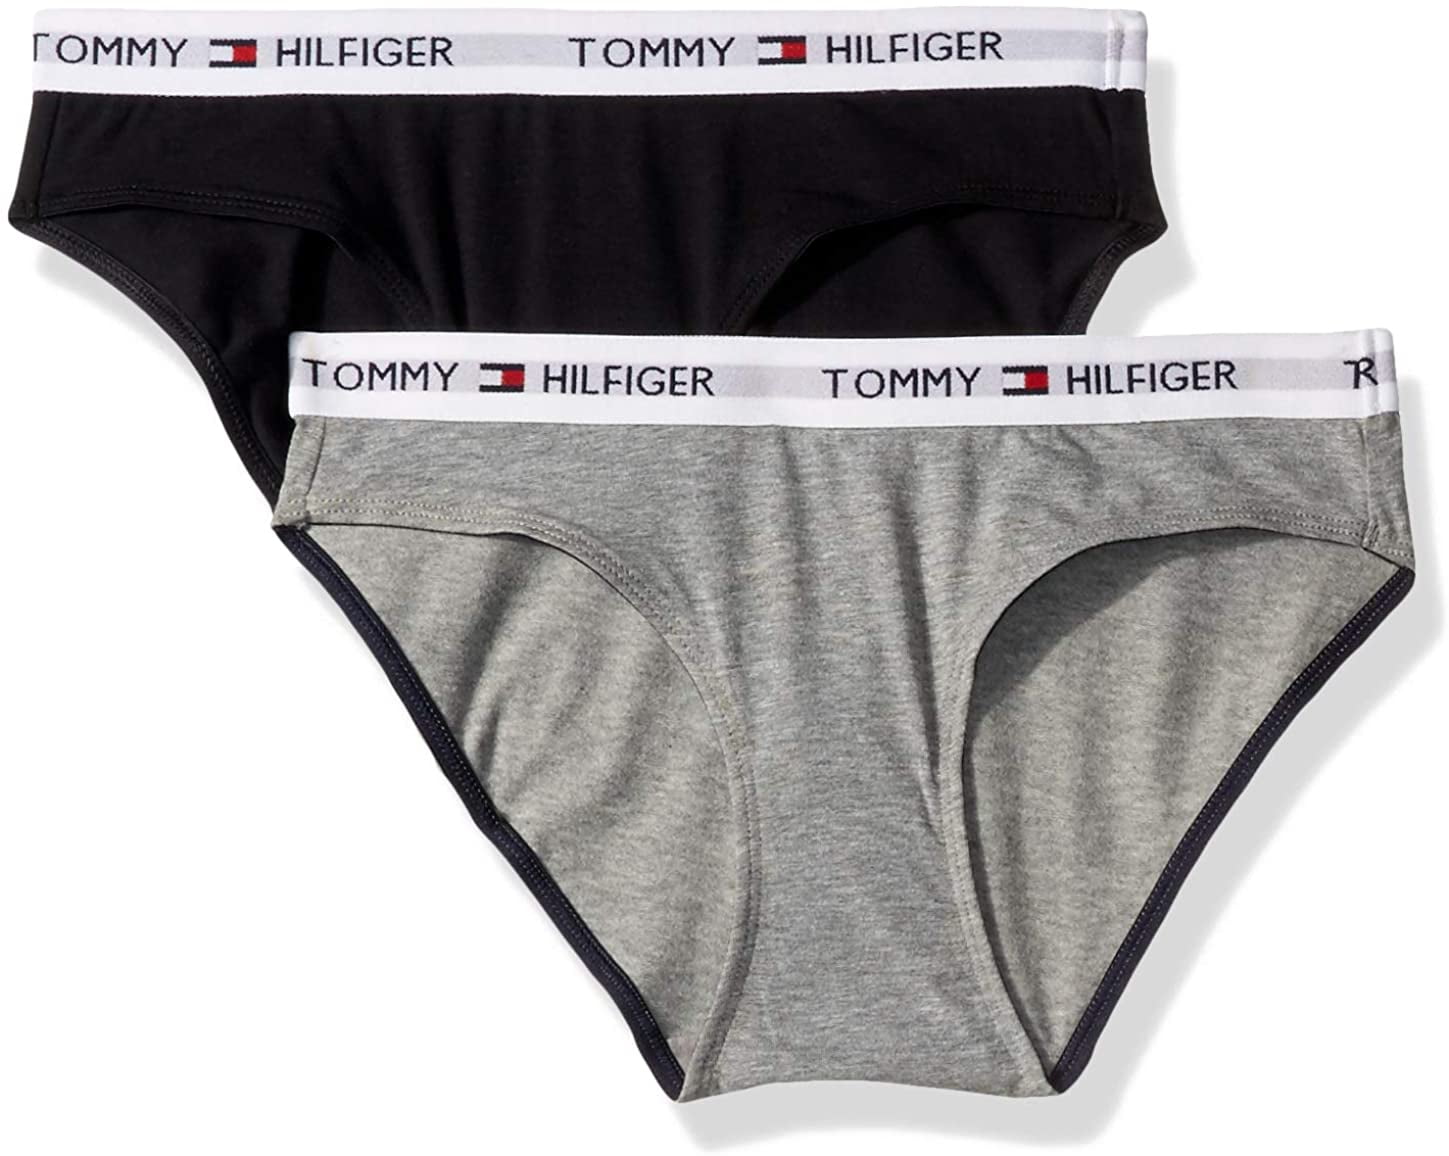 tommy hilfiger undergarments